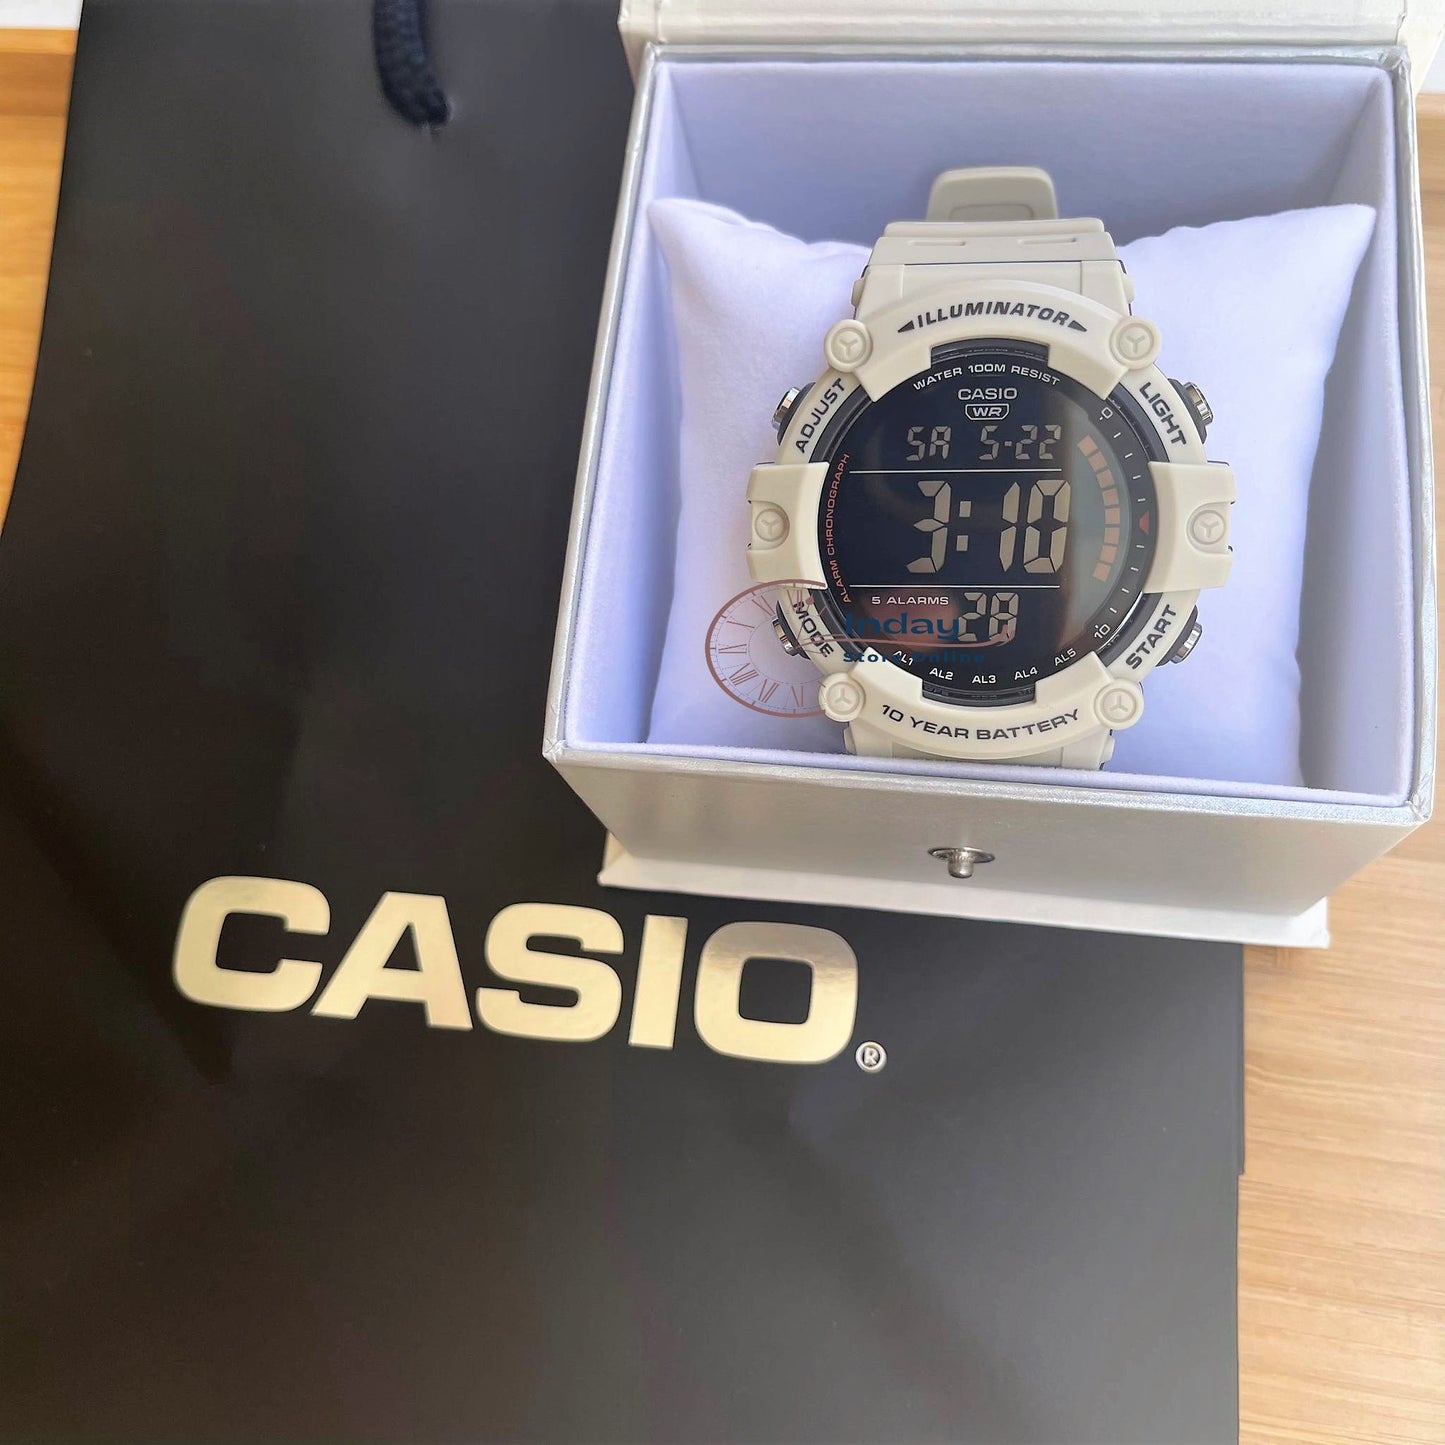 Casio Illuminator AE1500WH Series | 10-Year Battery | LED Backlight |  5-Alarms | 1/100 Sec Stopwatch | Men's Digital Watch